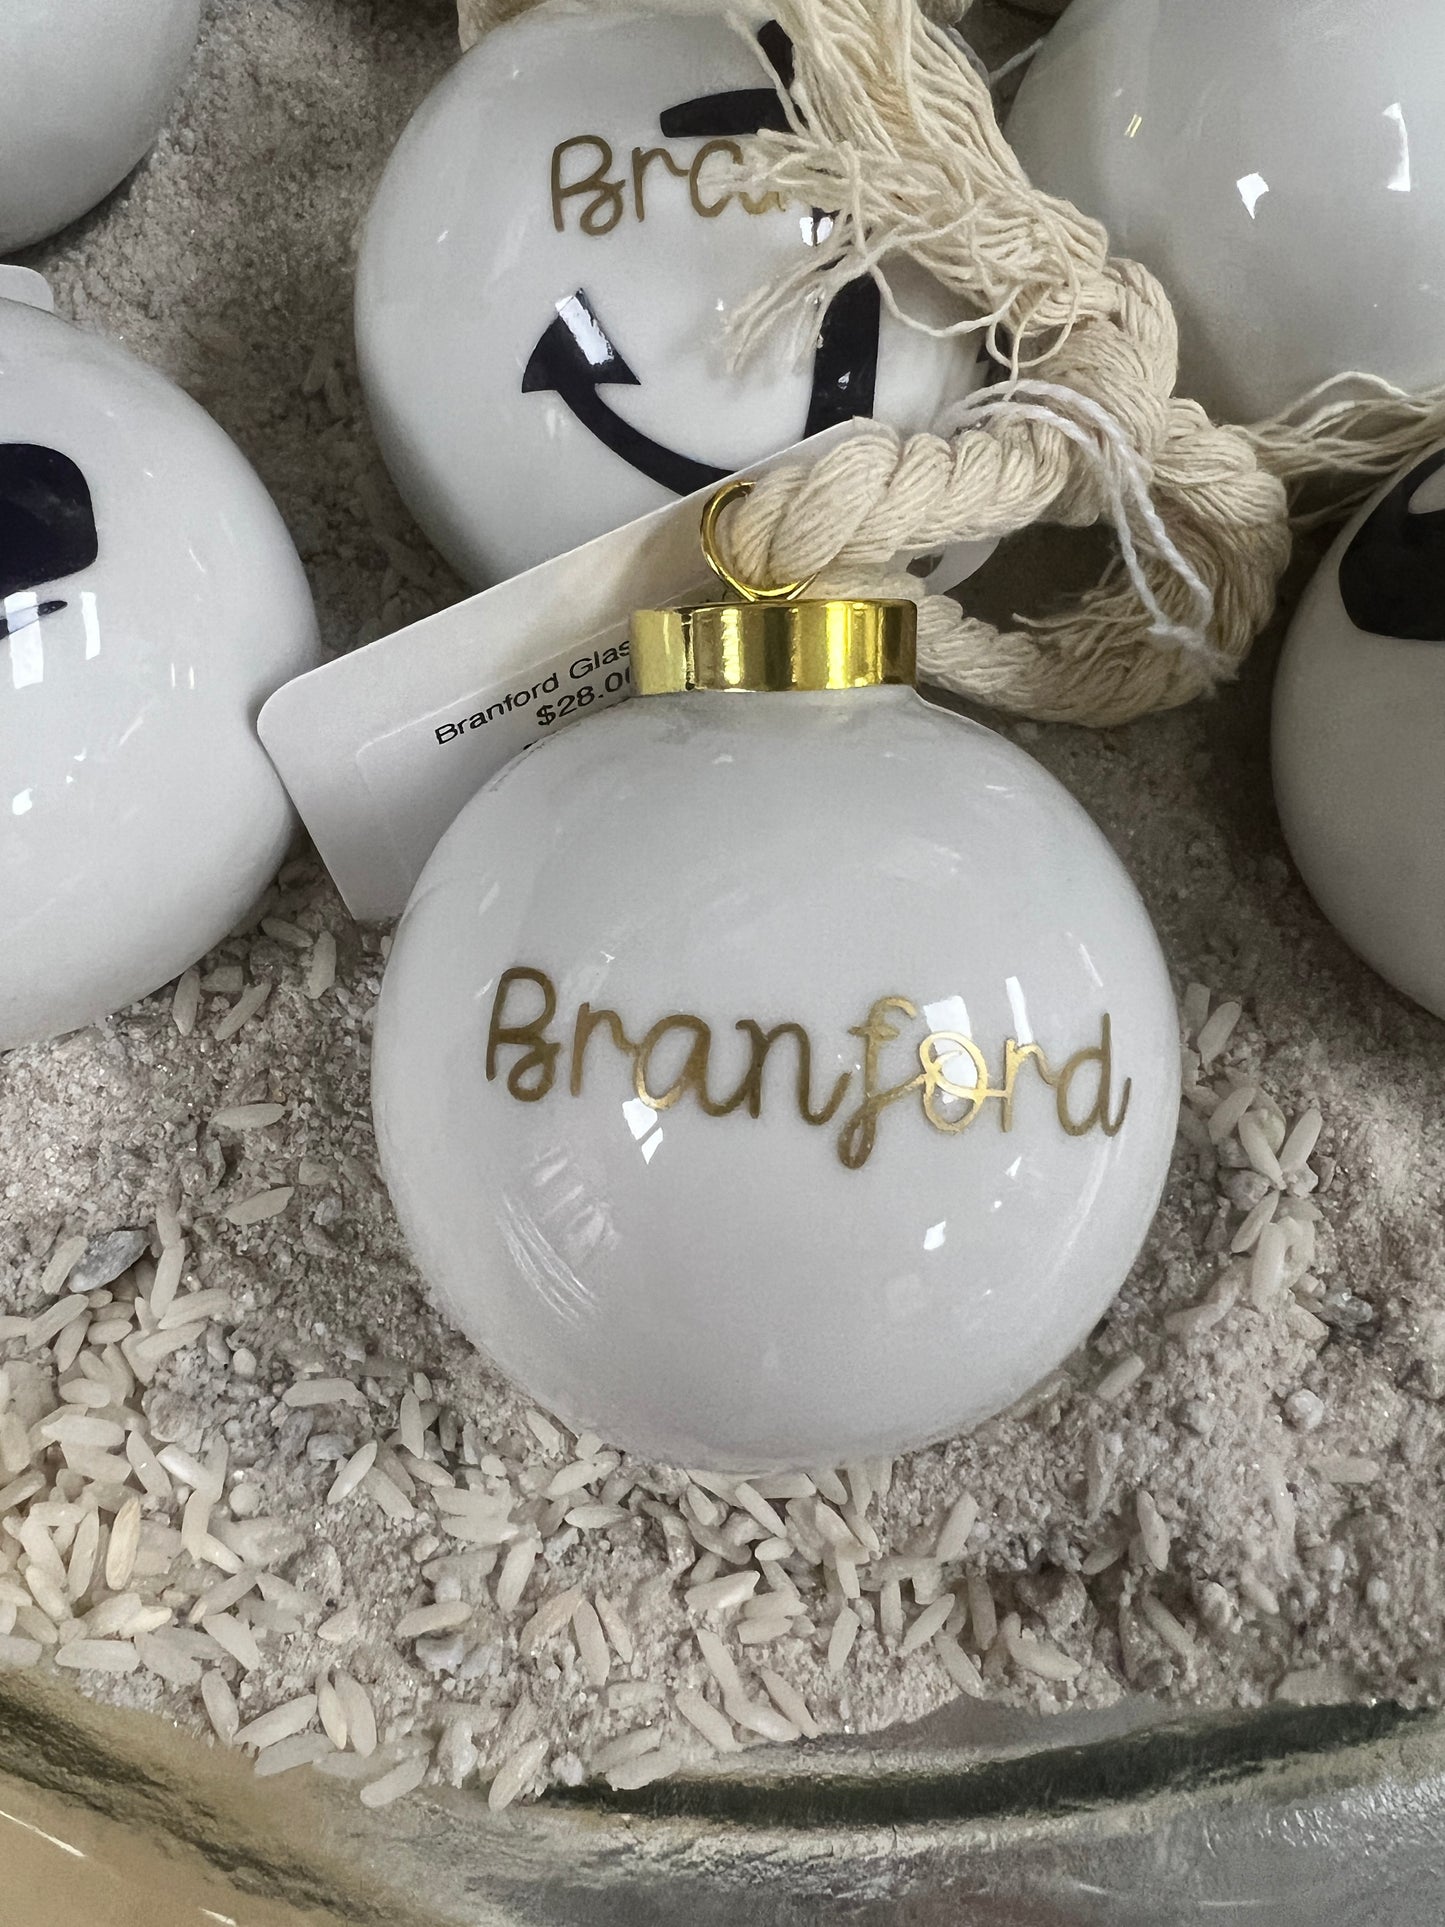 Branford Glass Ball Ornaments